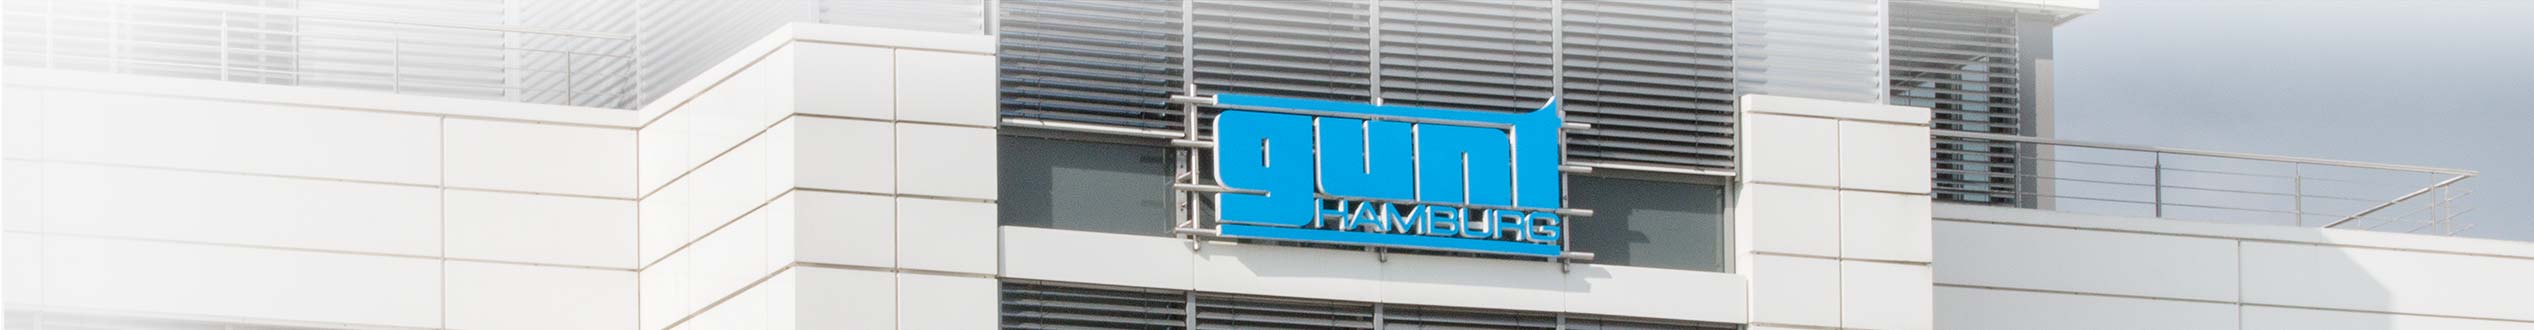 G.U.N.T. - Hamburg